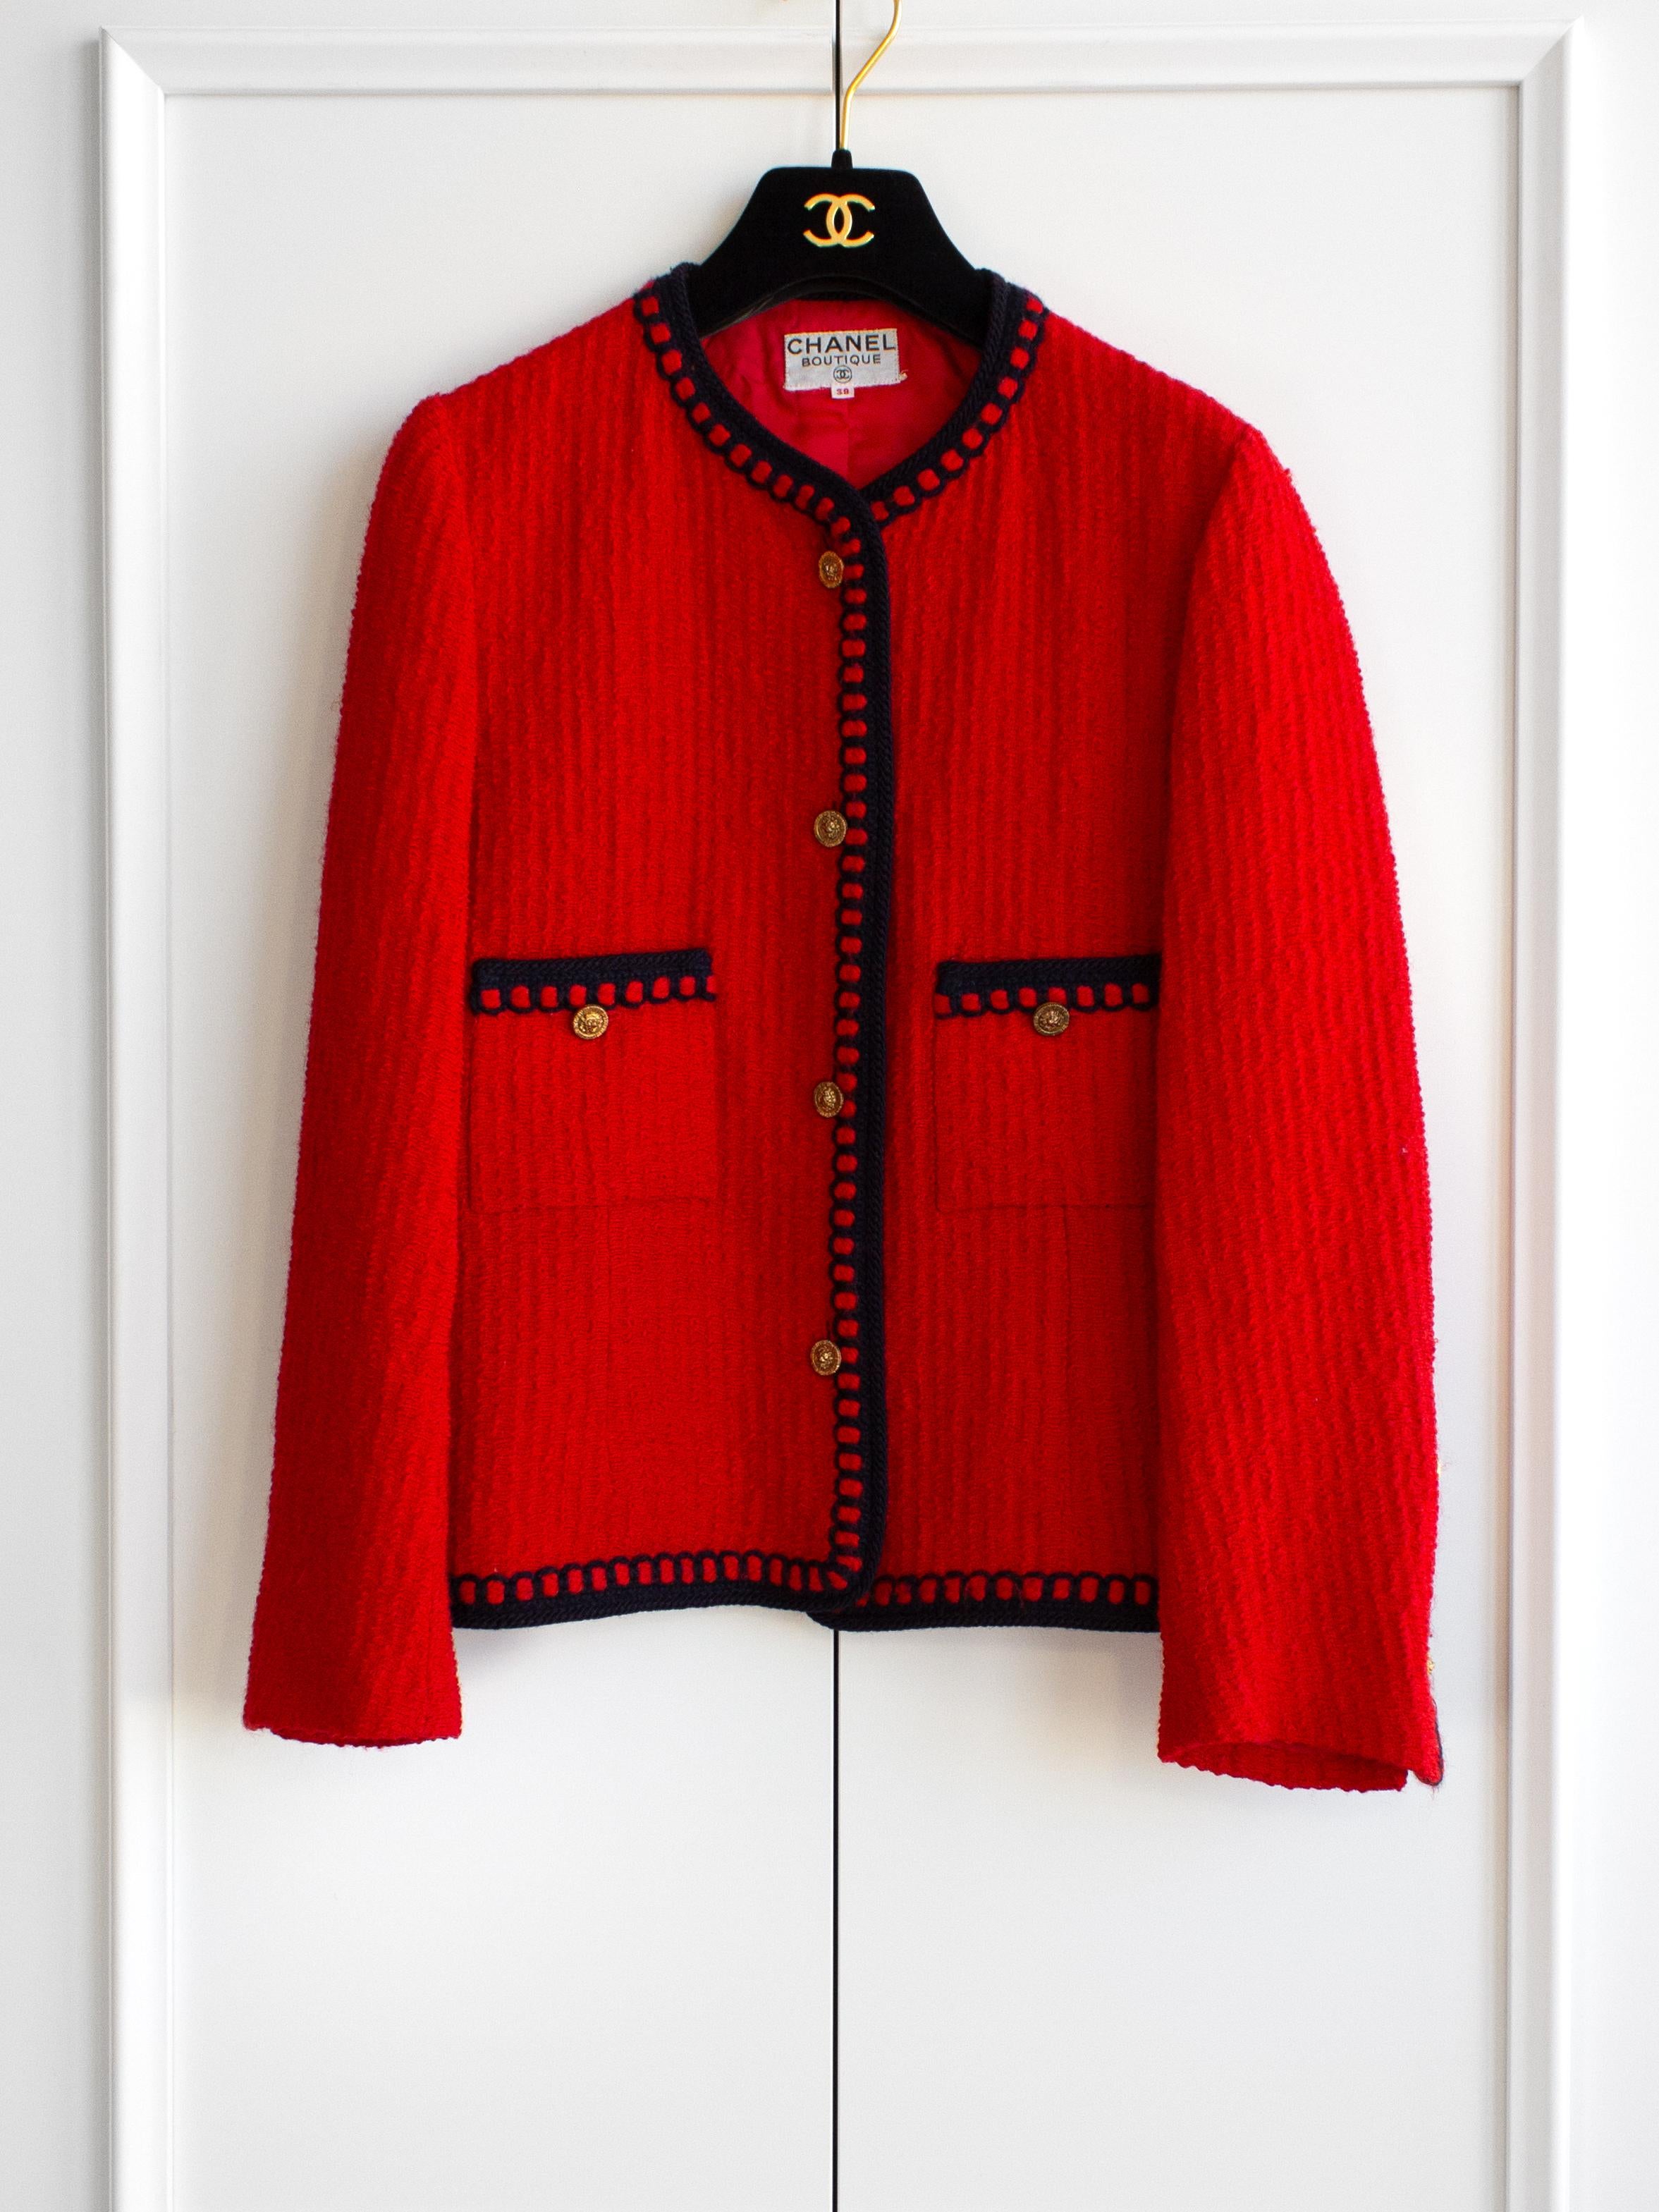 Chanel Vintage 1981 Parisian Red Gold Lion Tweed Jacket Skirt Suit For Sale 1